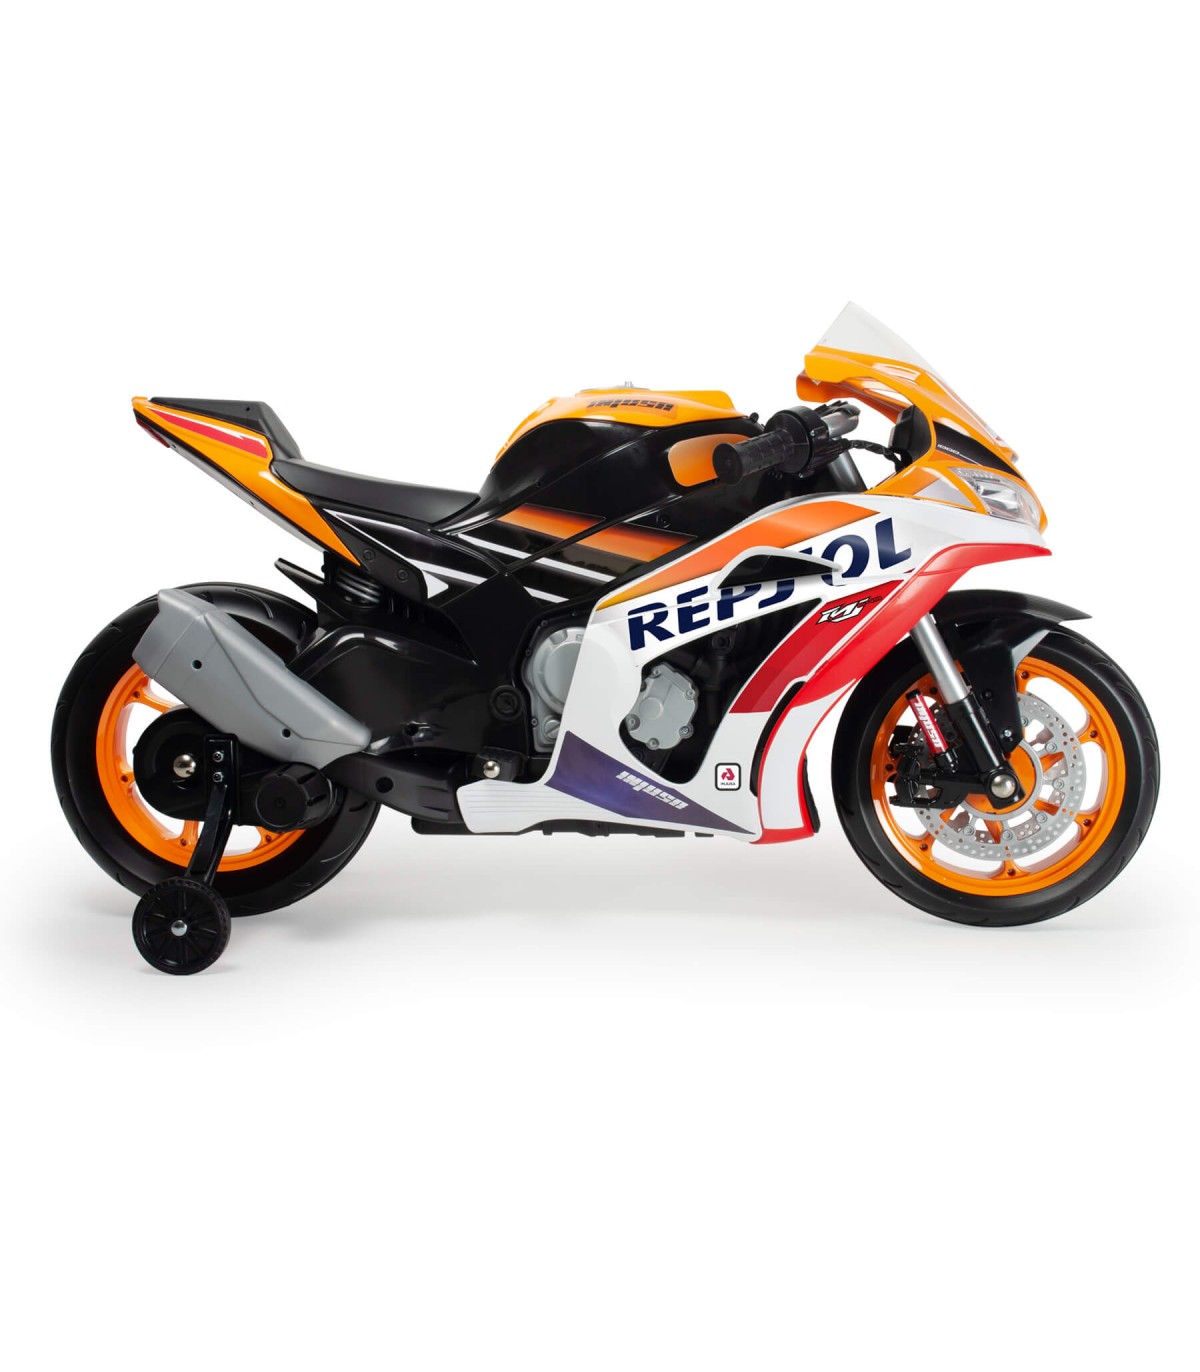 Injusa Moto cross KTM 12 V orange au meilleur prix sur